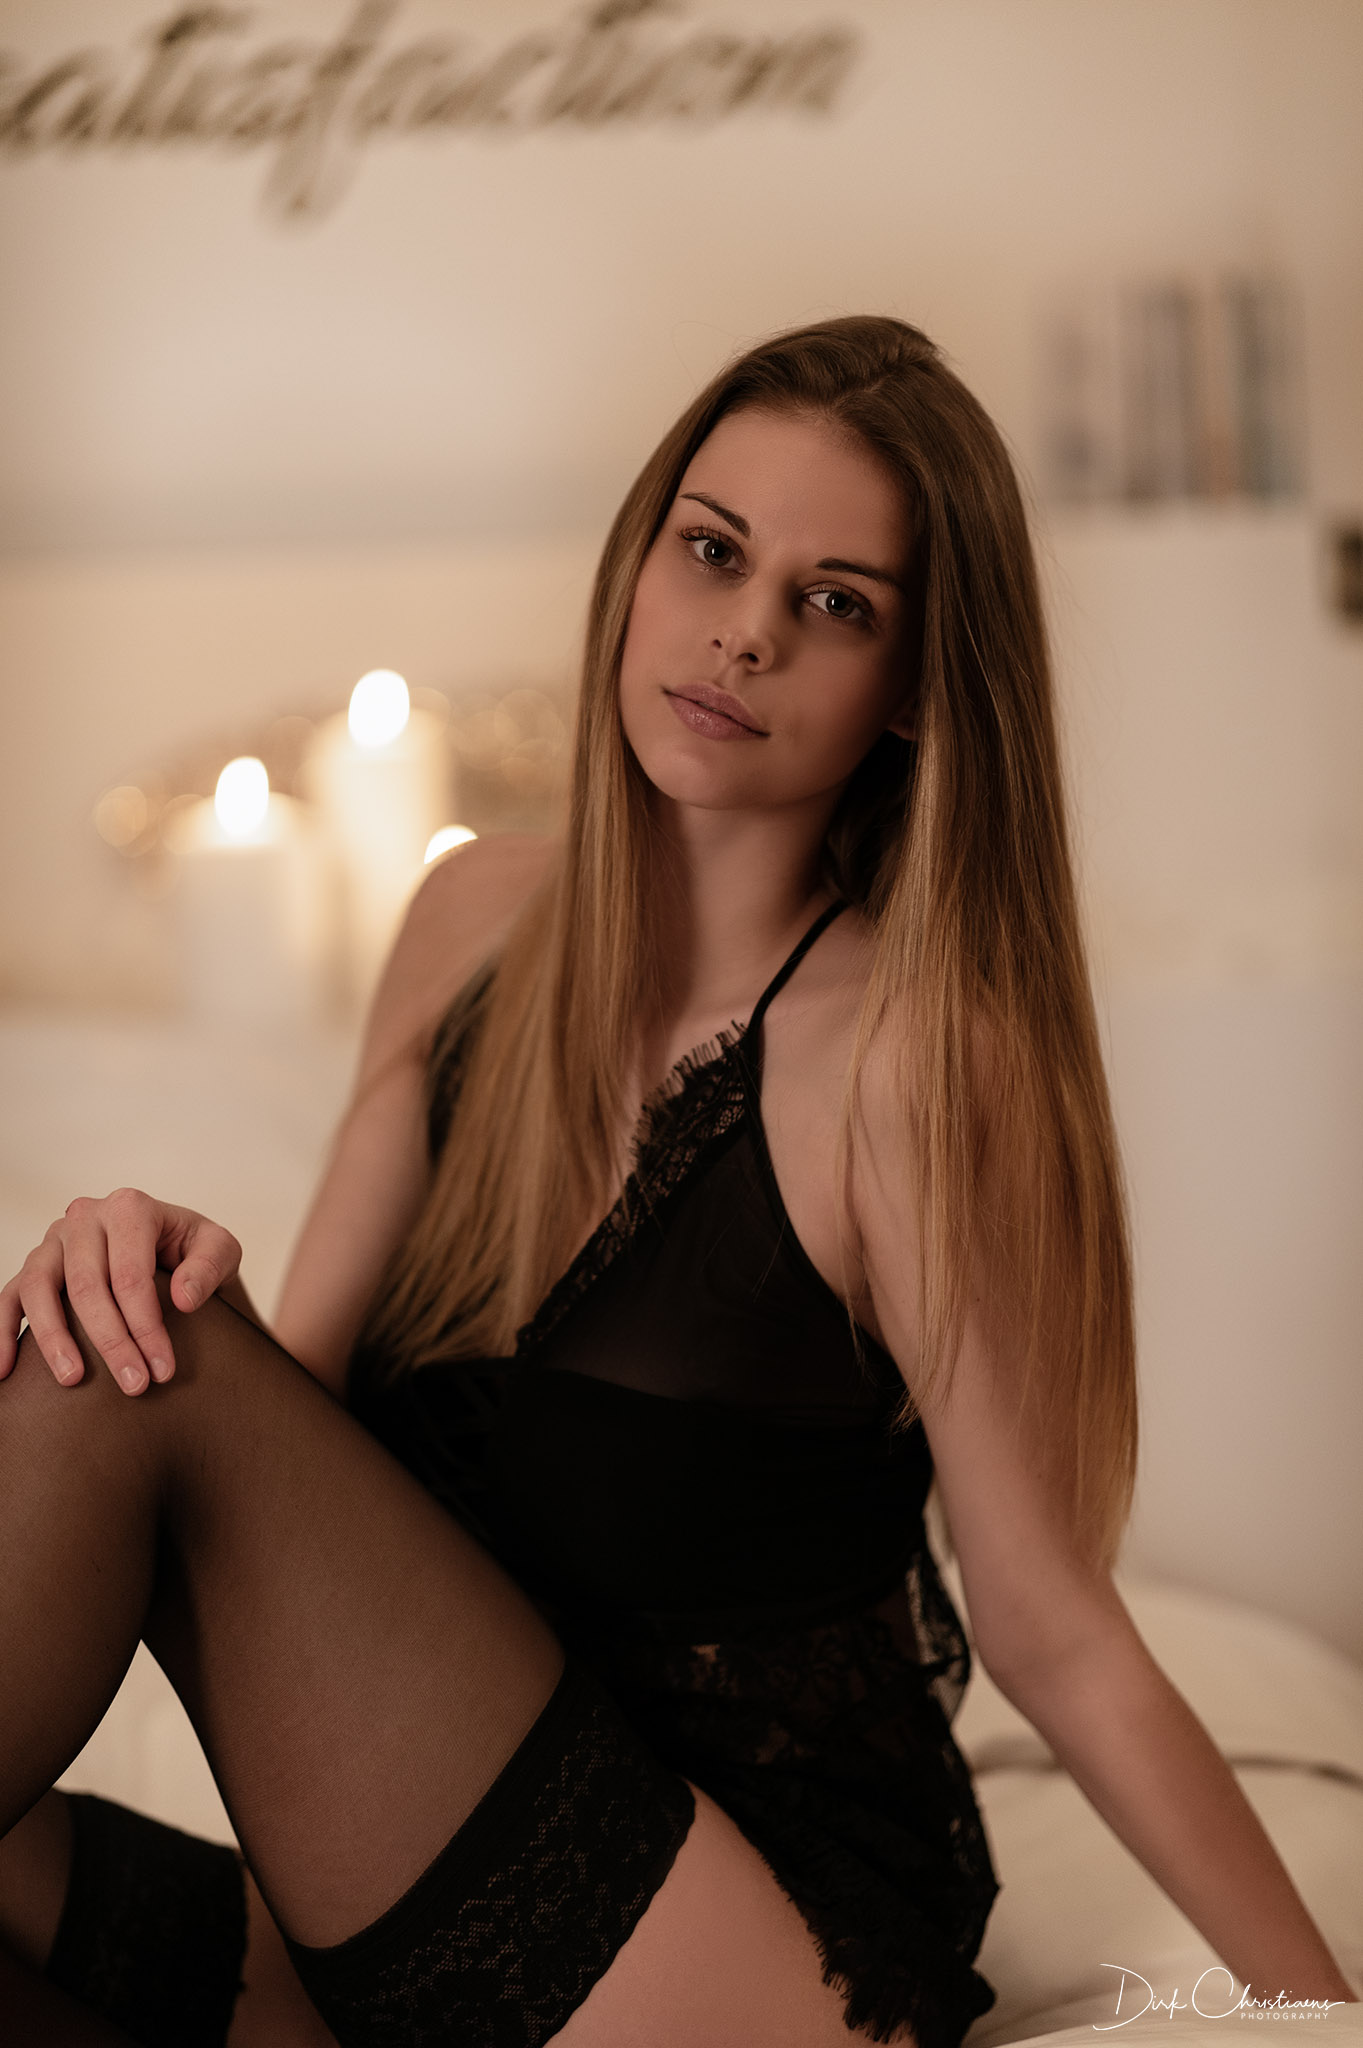 Yentl De Troyer, model from Belgium at a boudoir photoshoot